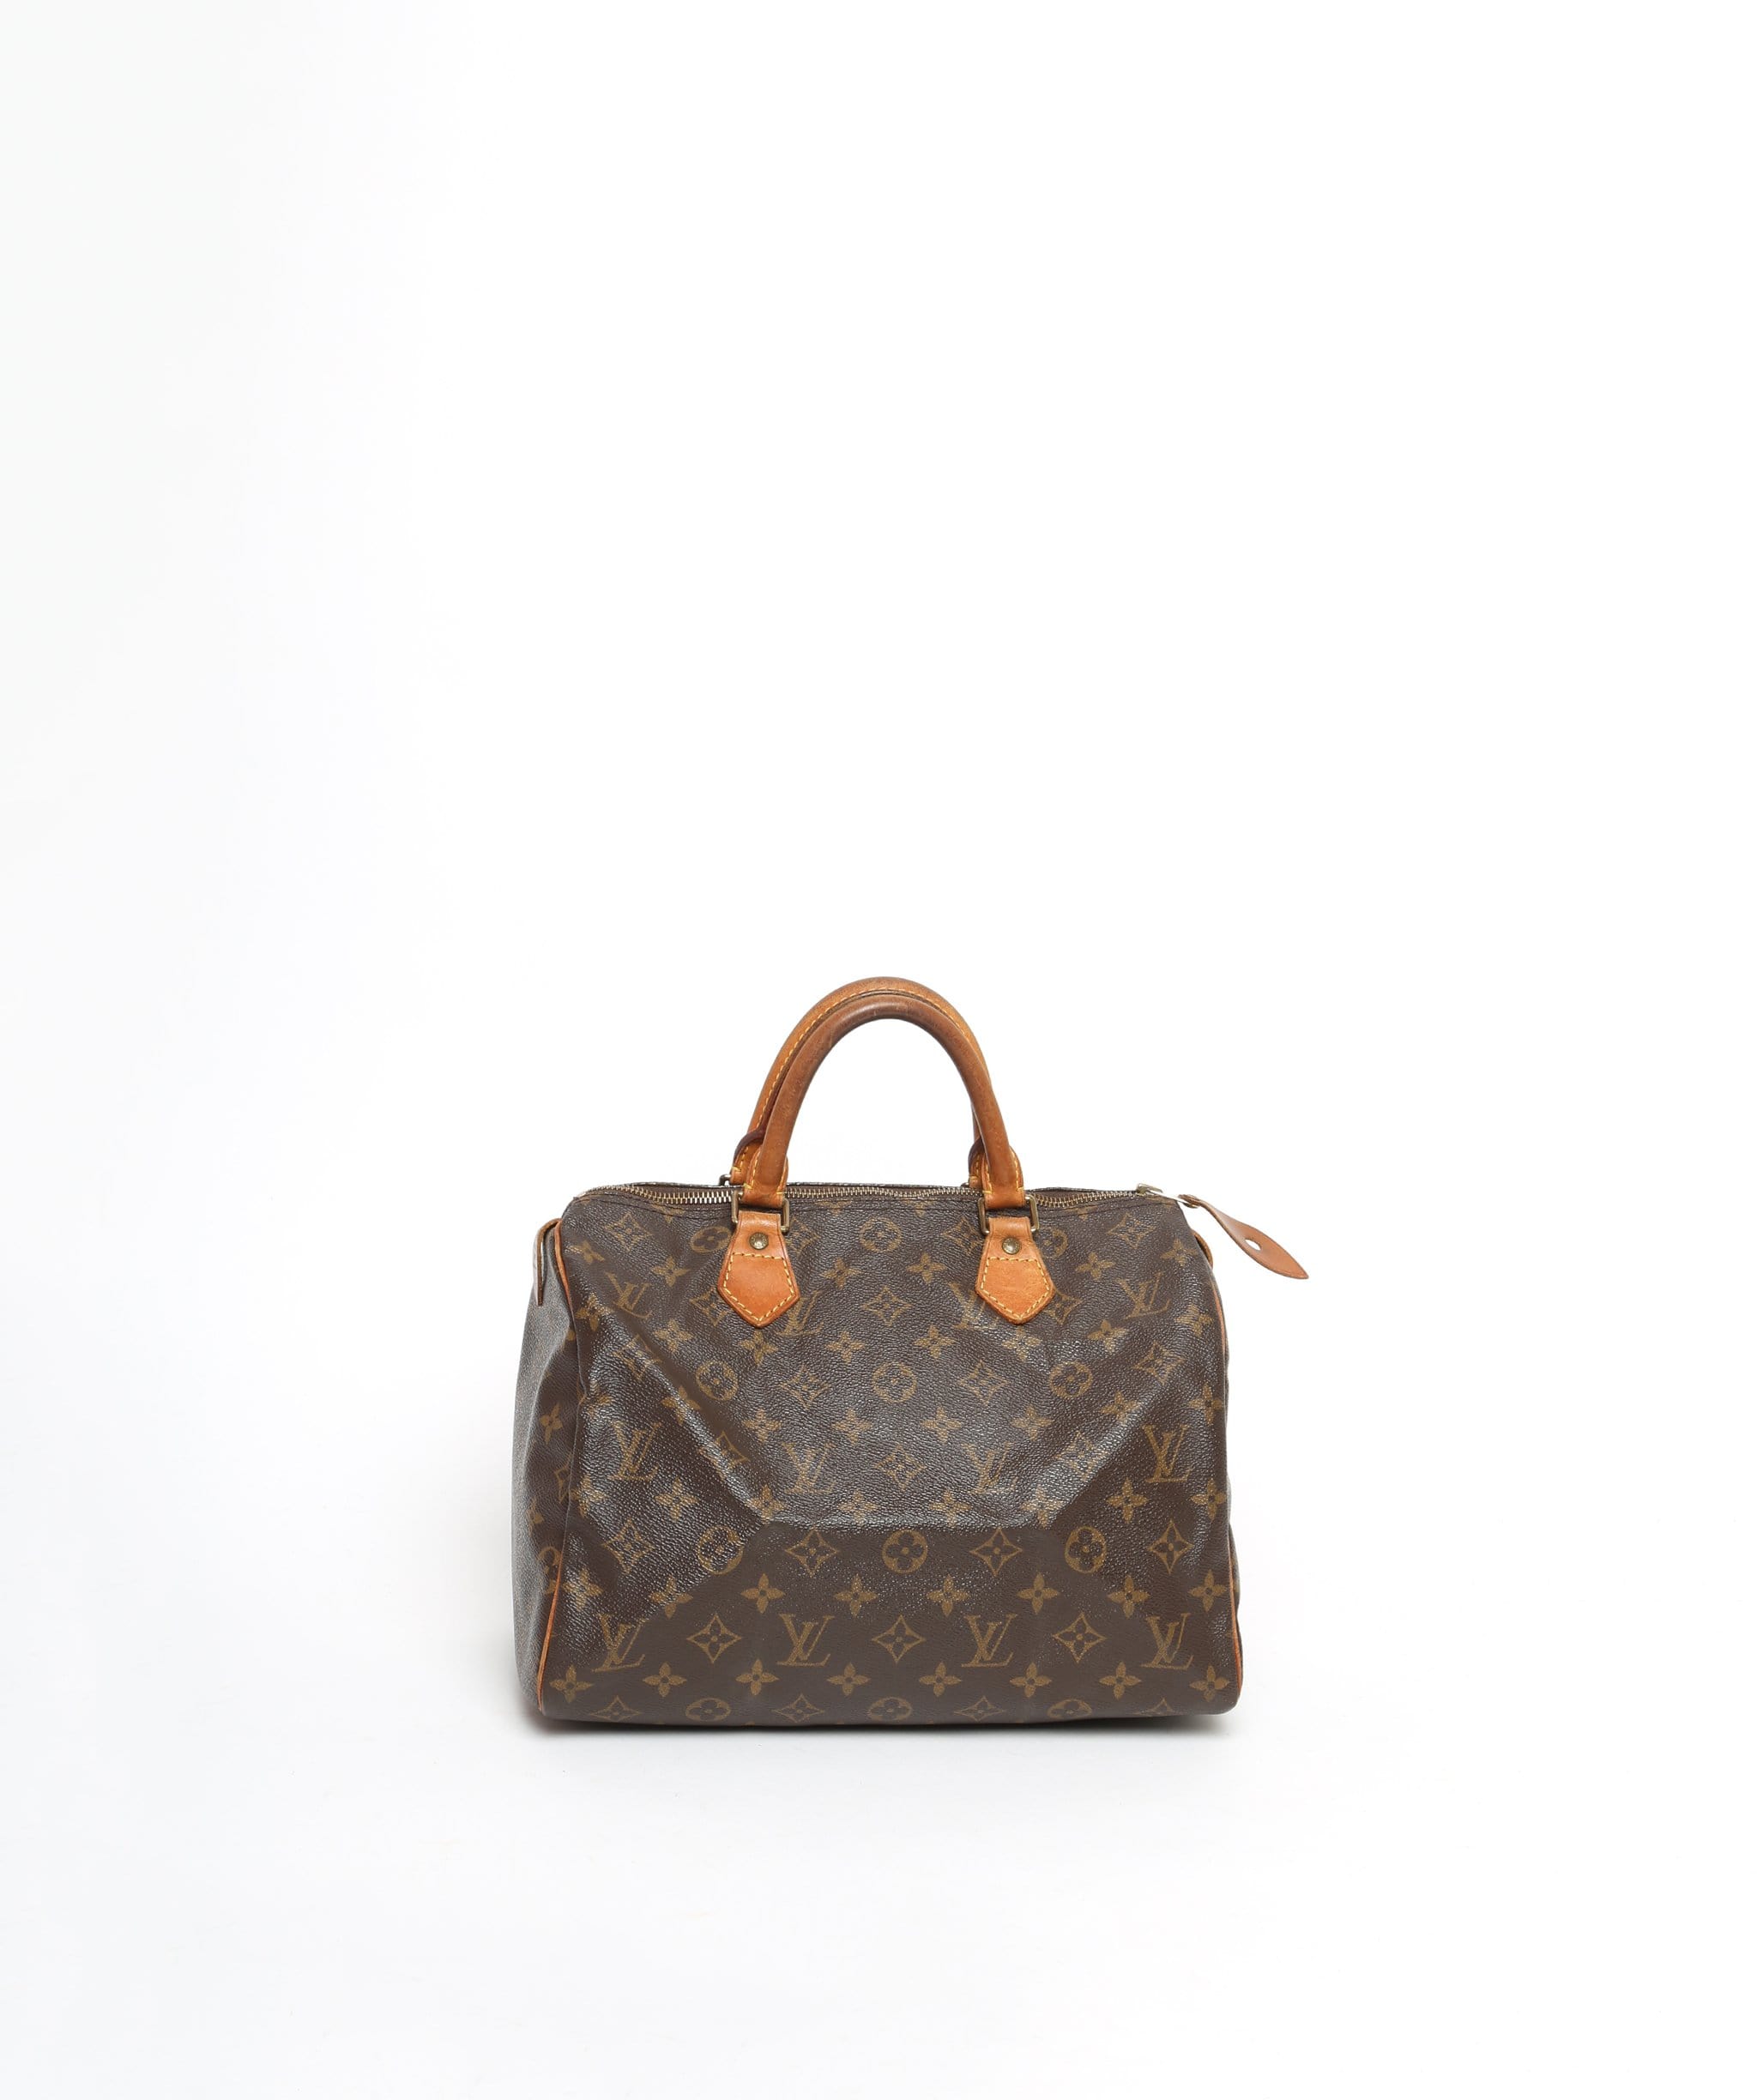 Authentic Louis Vuitton Monogram Speedy 30 Hand Bag Purse SP0955